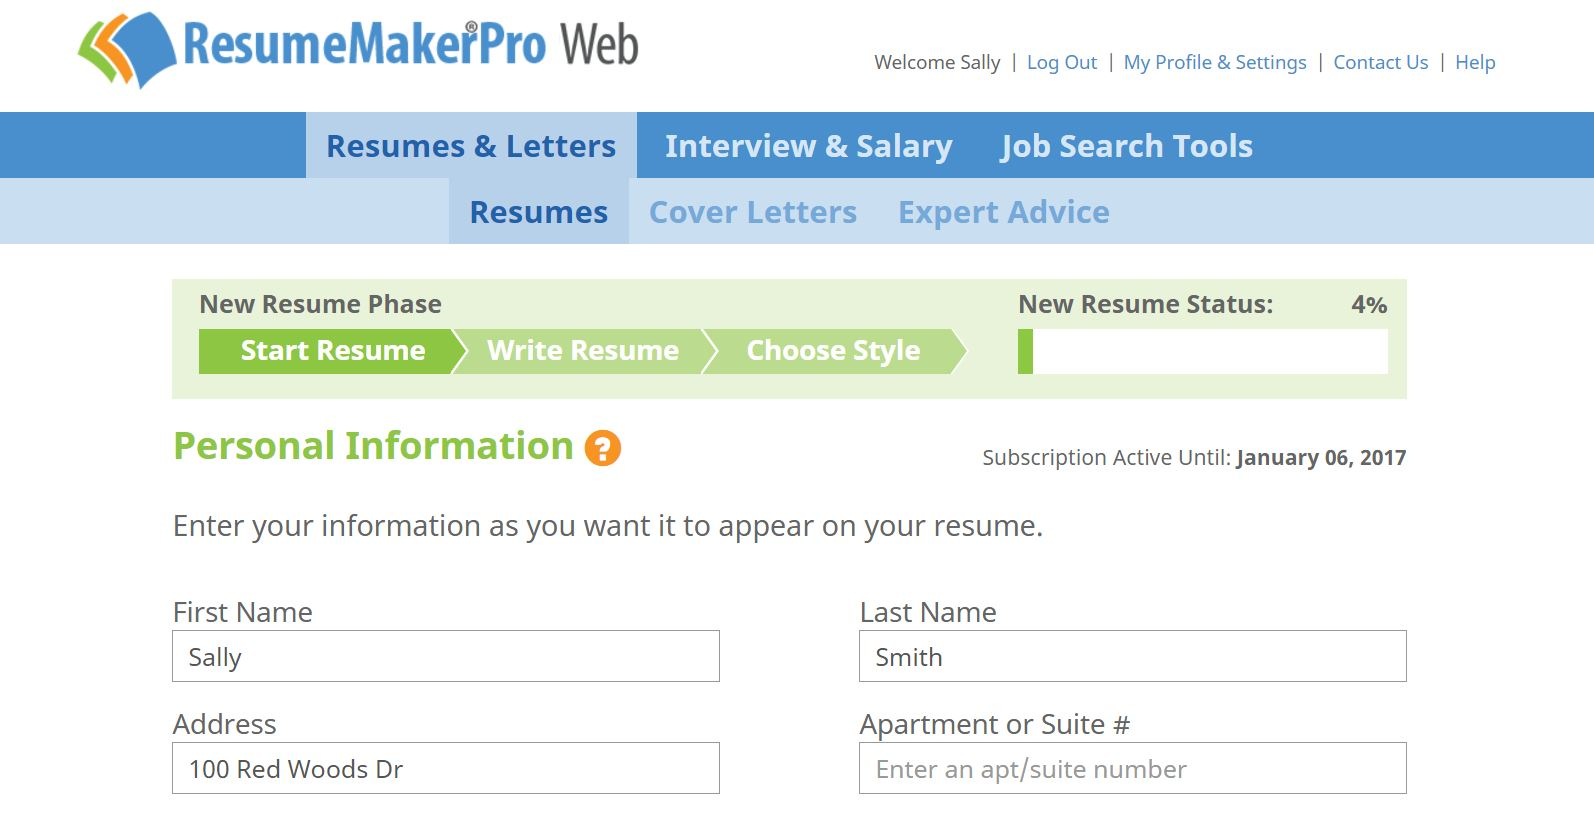 ResumeMakerPro Web - Annual Subscription, Productivity Software Screenshot